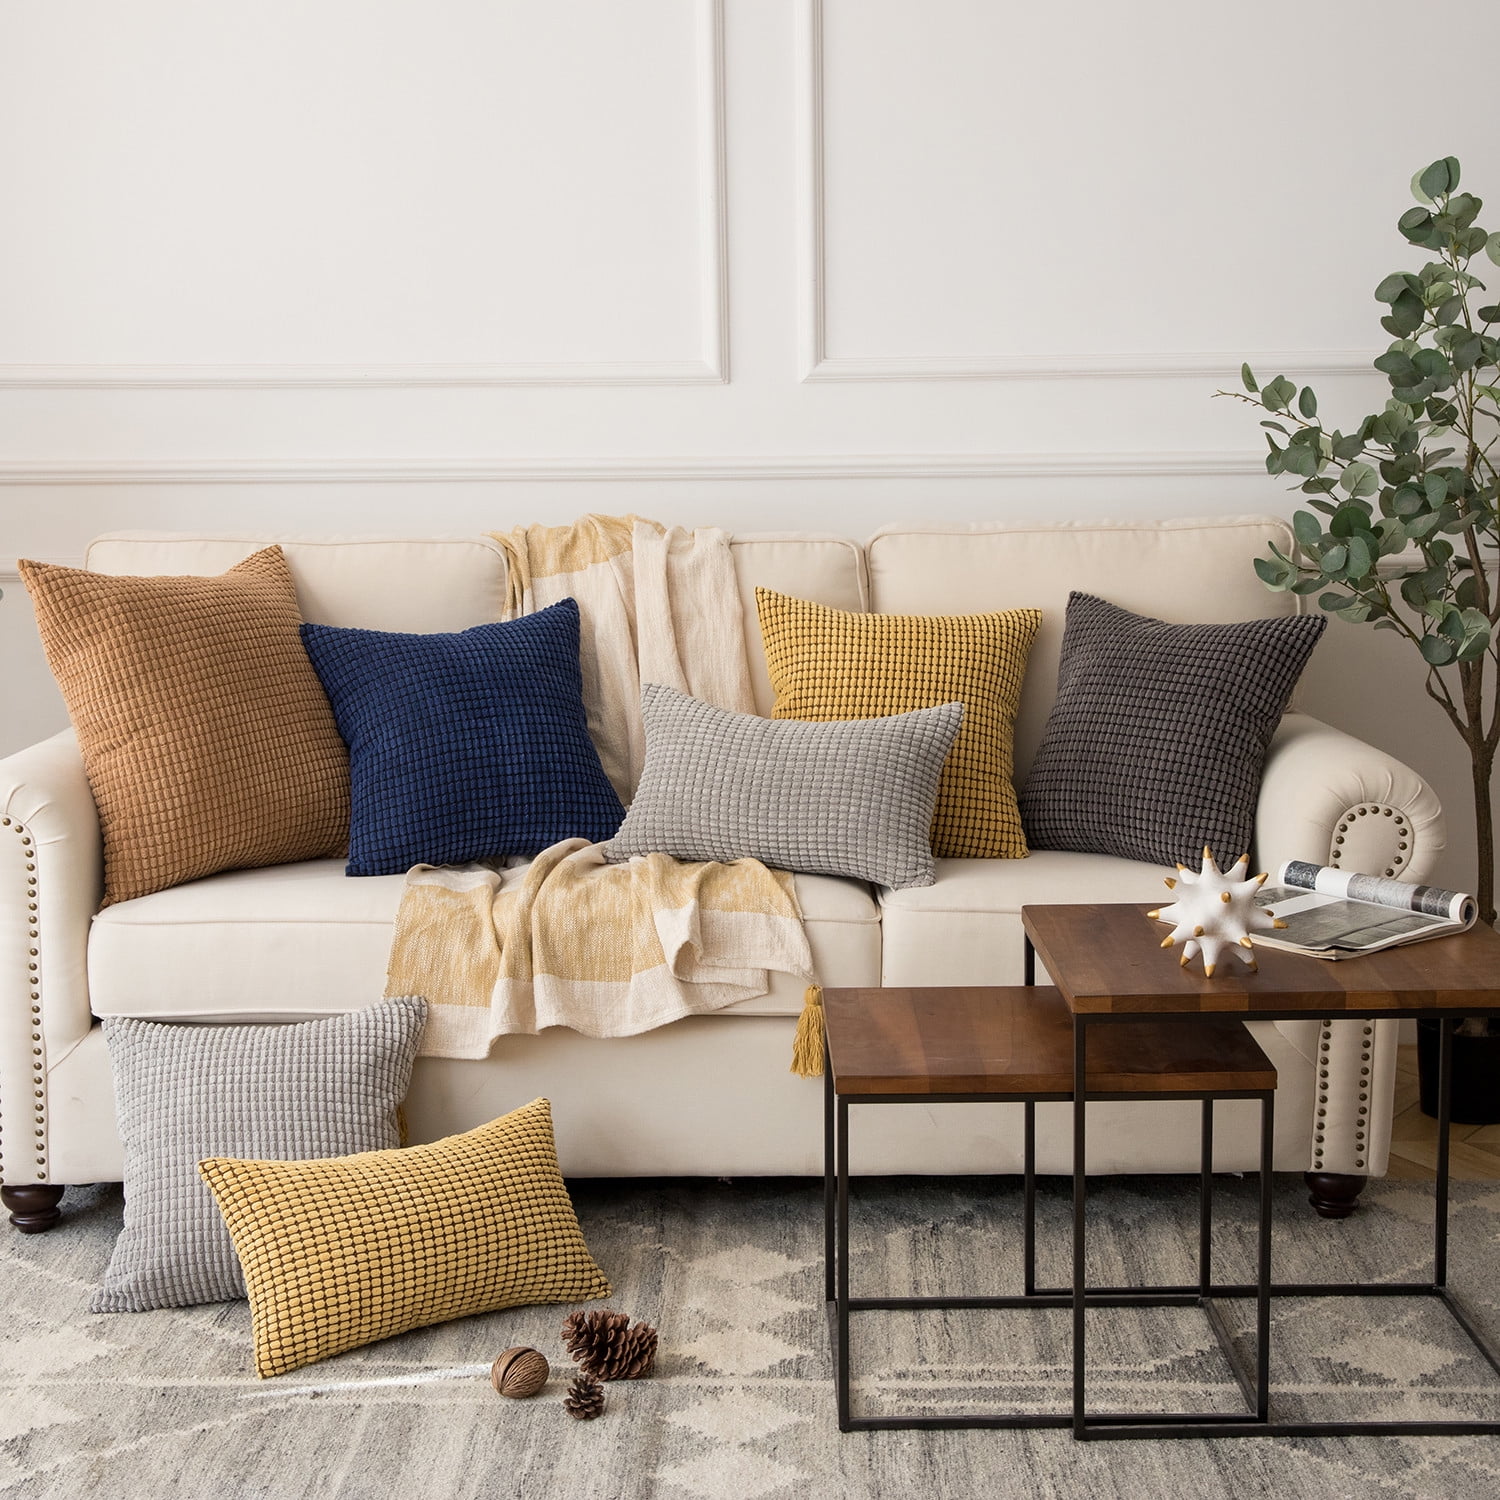 Decorative Throw Pillow Set, Linen Trimmed Farmhouse & Soft Corduroy Striped Velvet Series Bundle, for Sofa Couch Bedroom, Dark Gray & Off White, 18